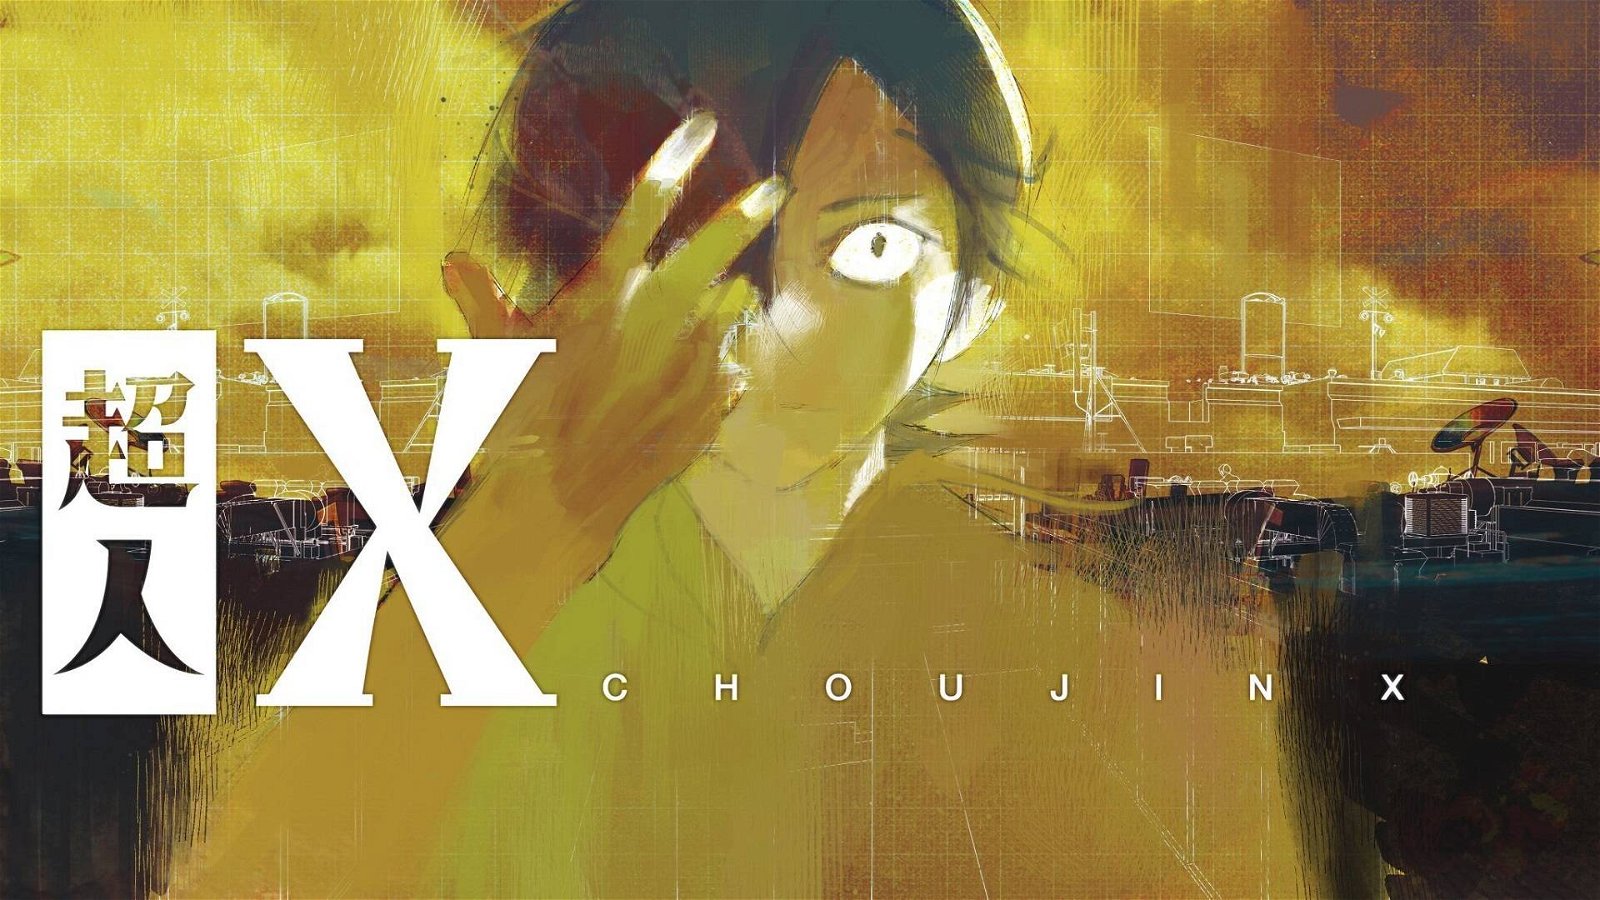 Immagine di Choujin X Capitolo 2 di Sui Ishida (Tokyo Ghoul): data di uscita su MANGA Plus